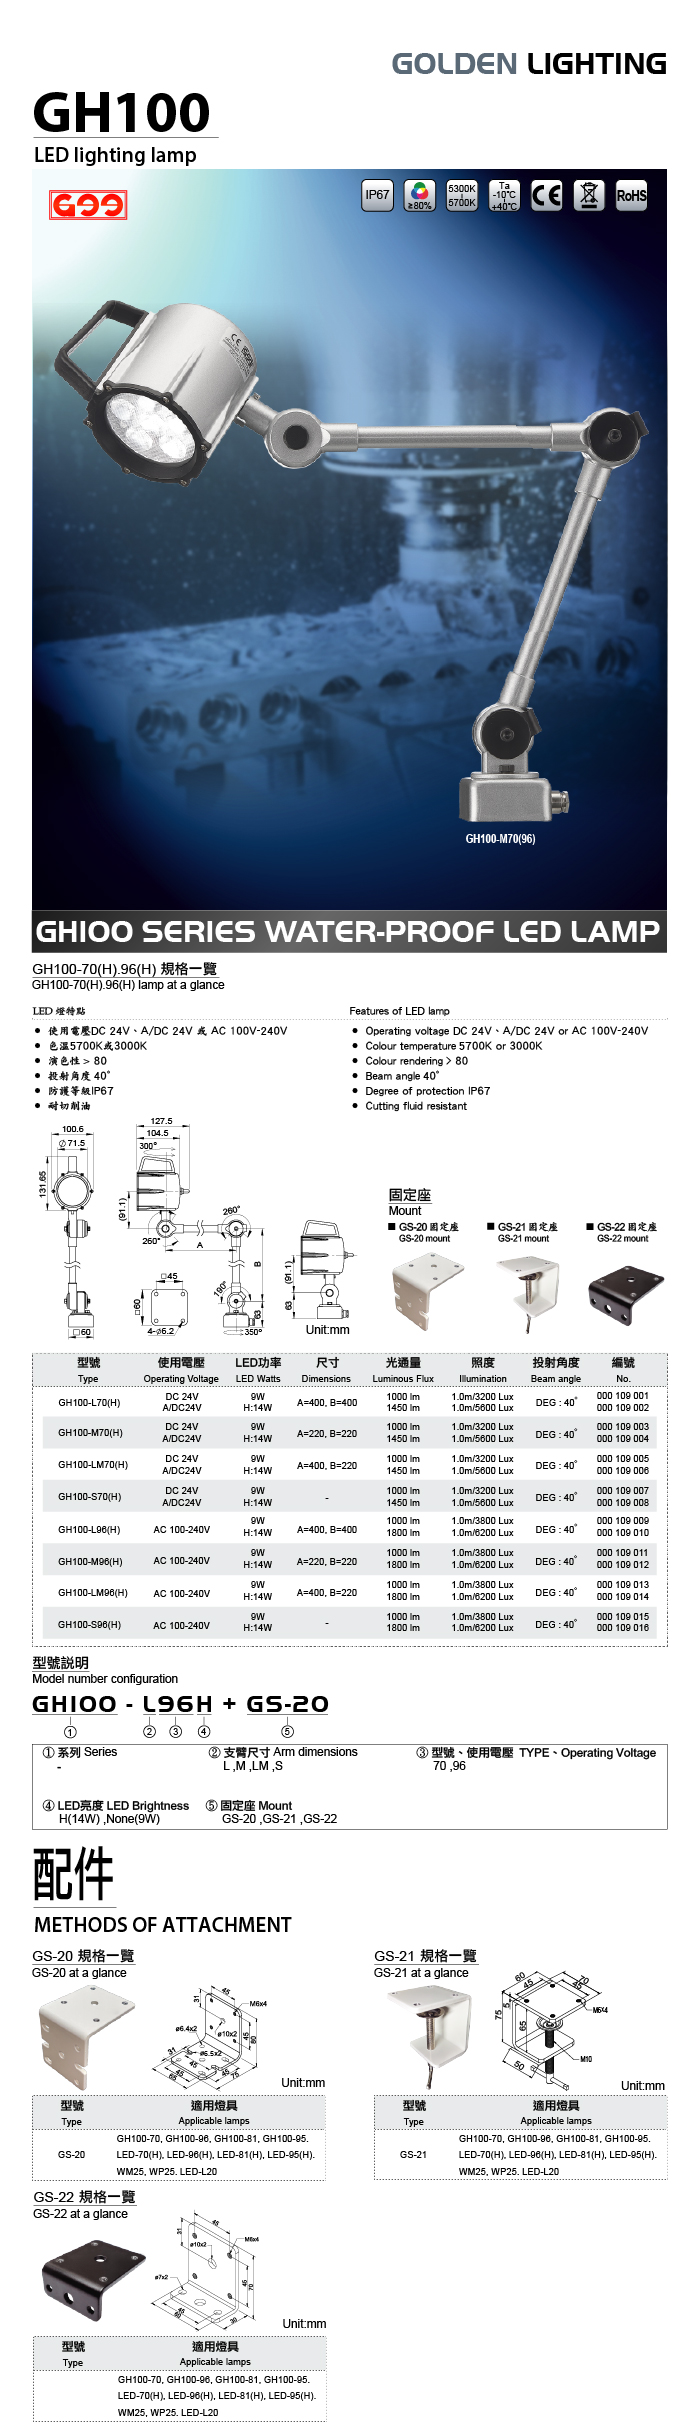 GH100-70.96 WATER-PROOF LED LIGHTING LAMP